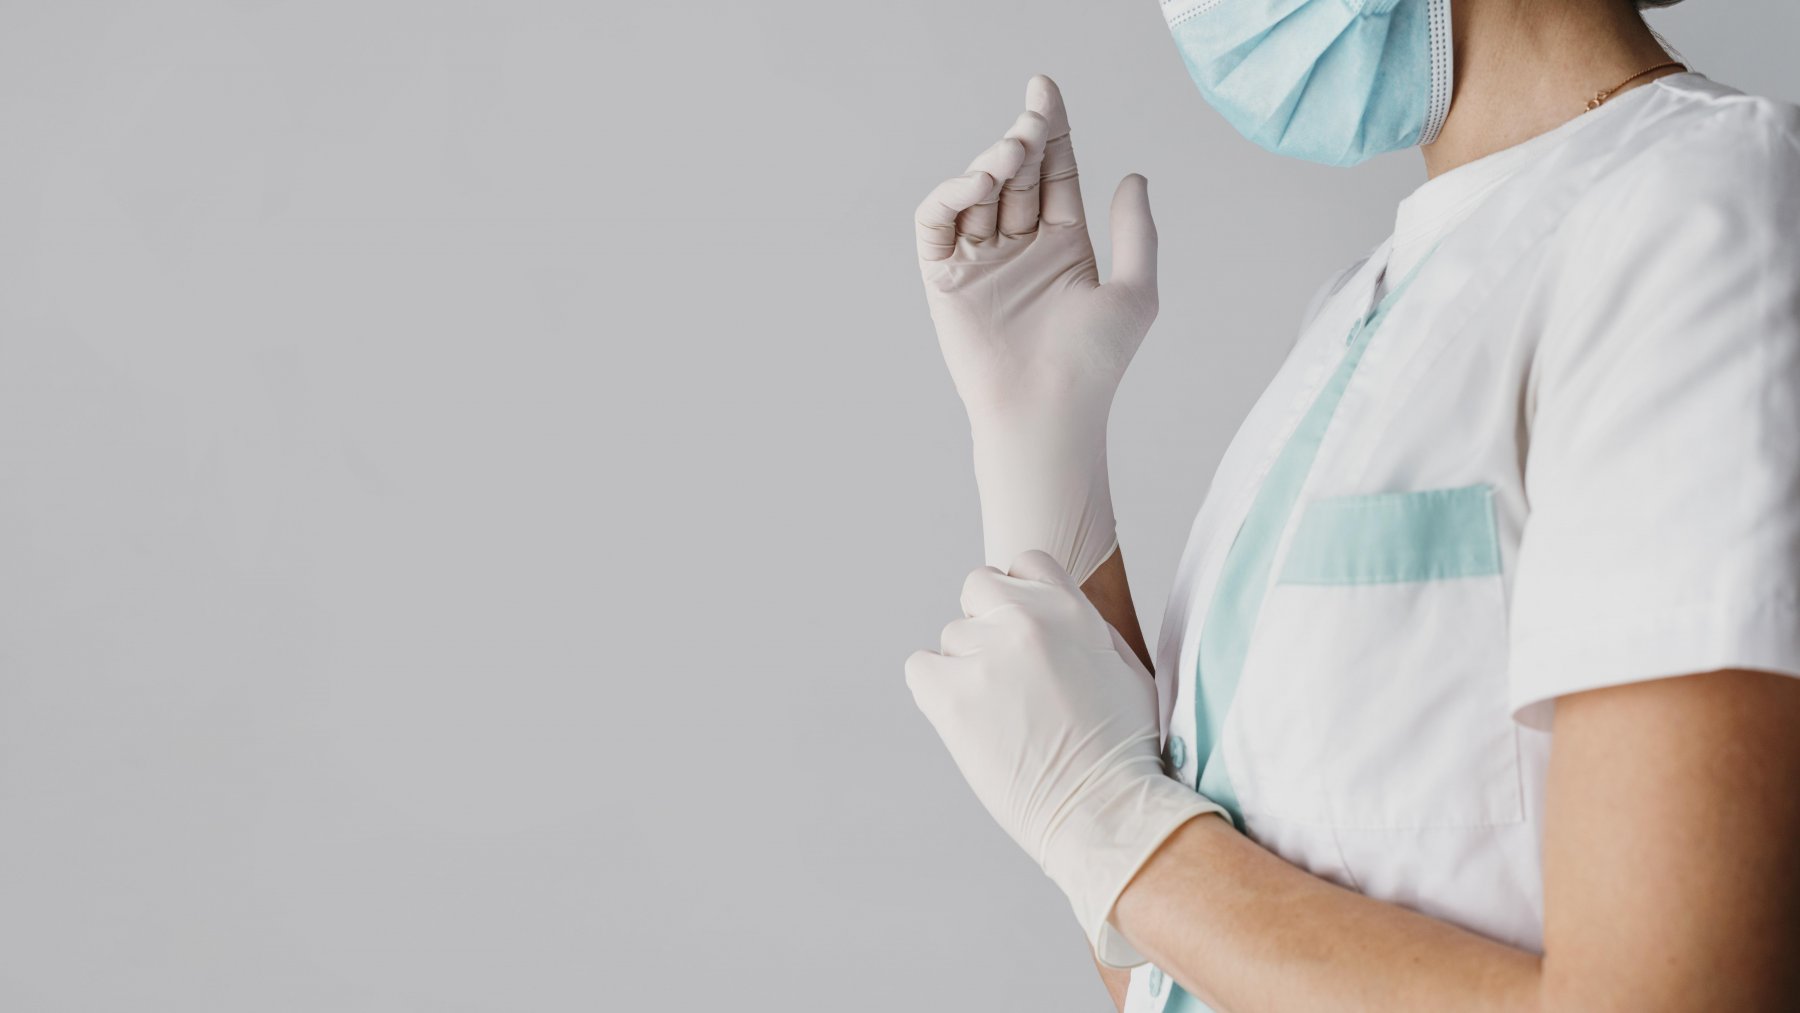 В Красногорске врачи удалили пациентке 25-сантиметровую опухоль яичника